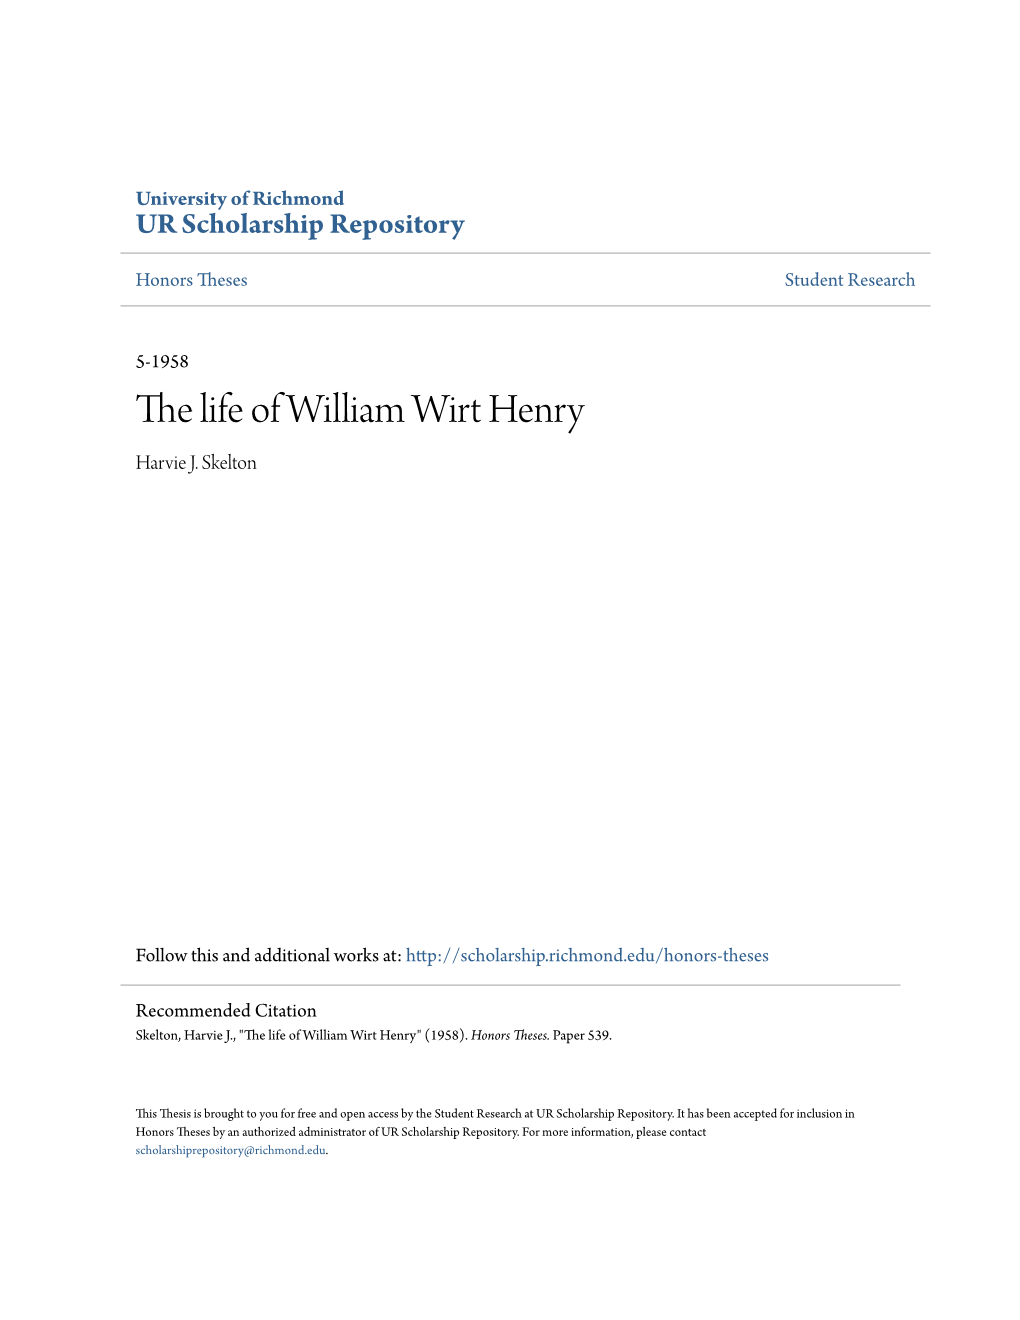 The Life of William Wirt Henry Harvie J